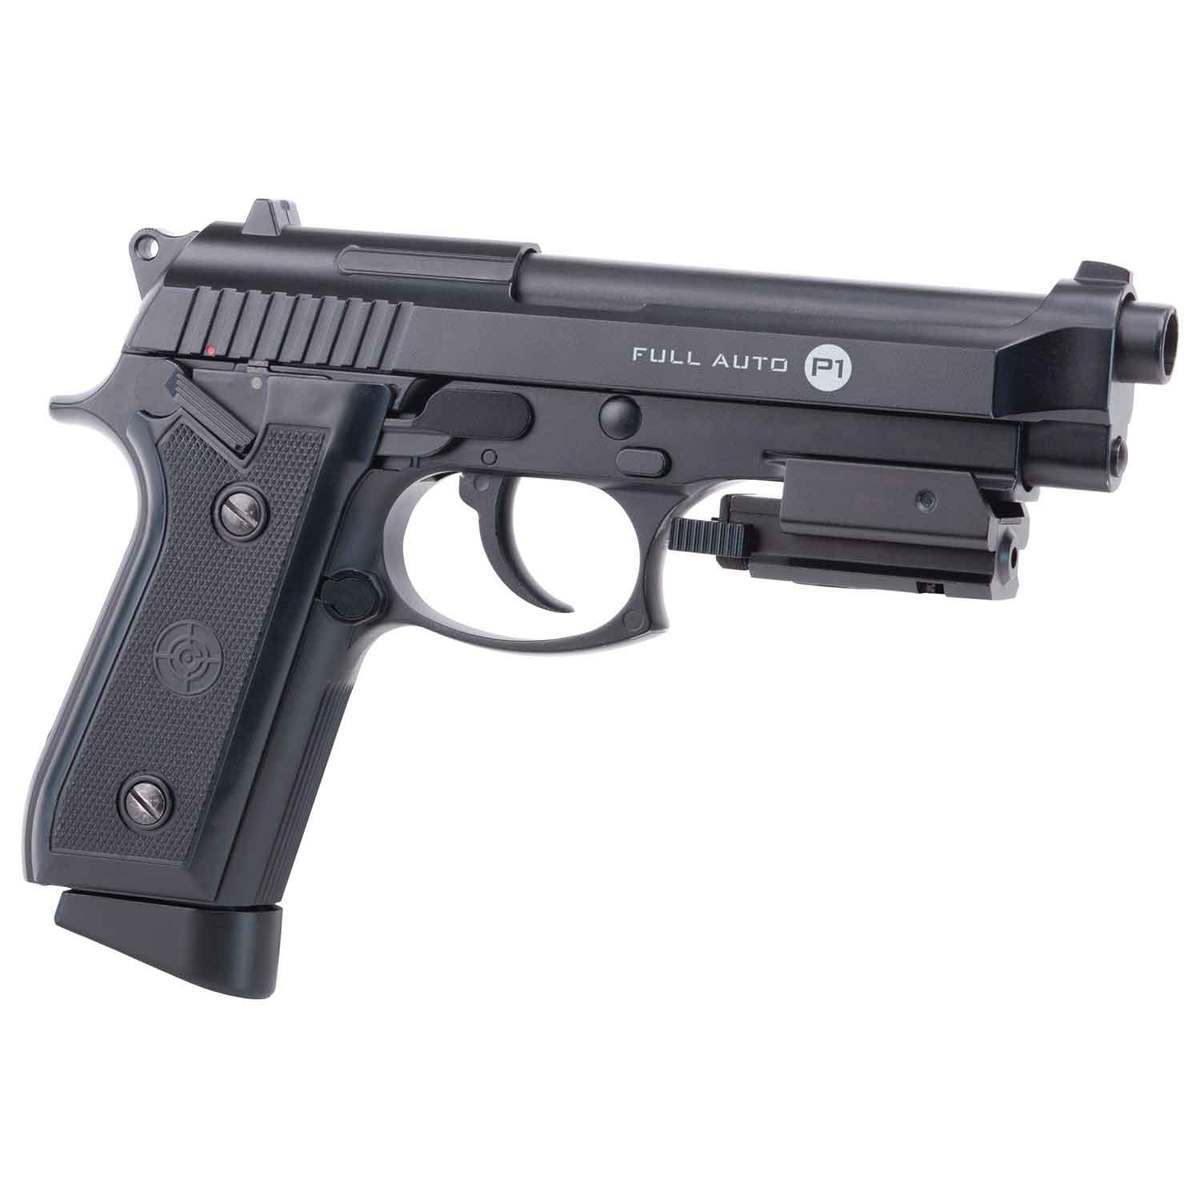  Beretta M 92 FS All Metal .177 Caliber Pellet Gun Air Pistol,  Black, One Size : Airsoft Pistols : Sports & Outdoors